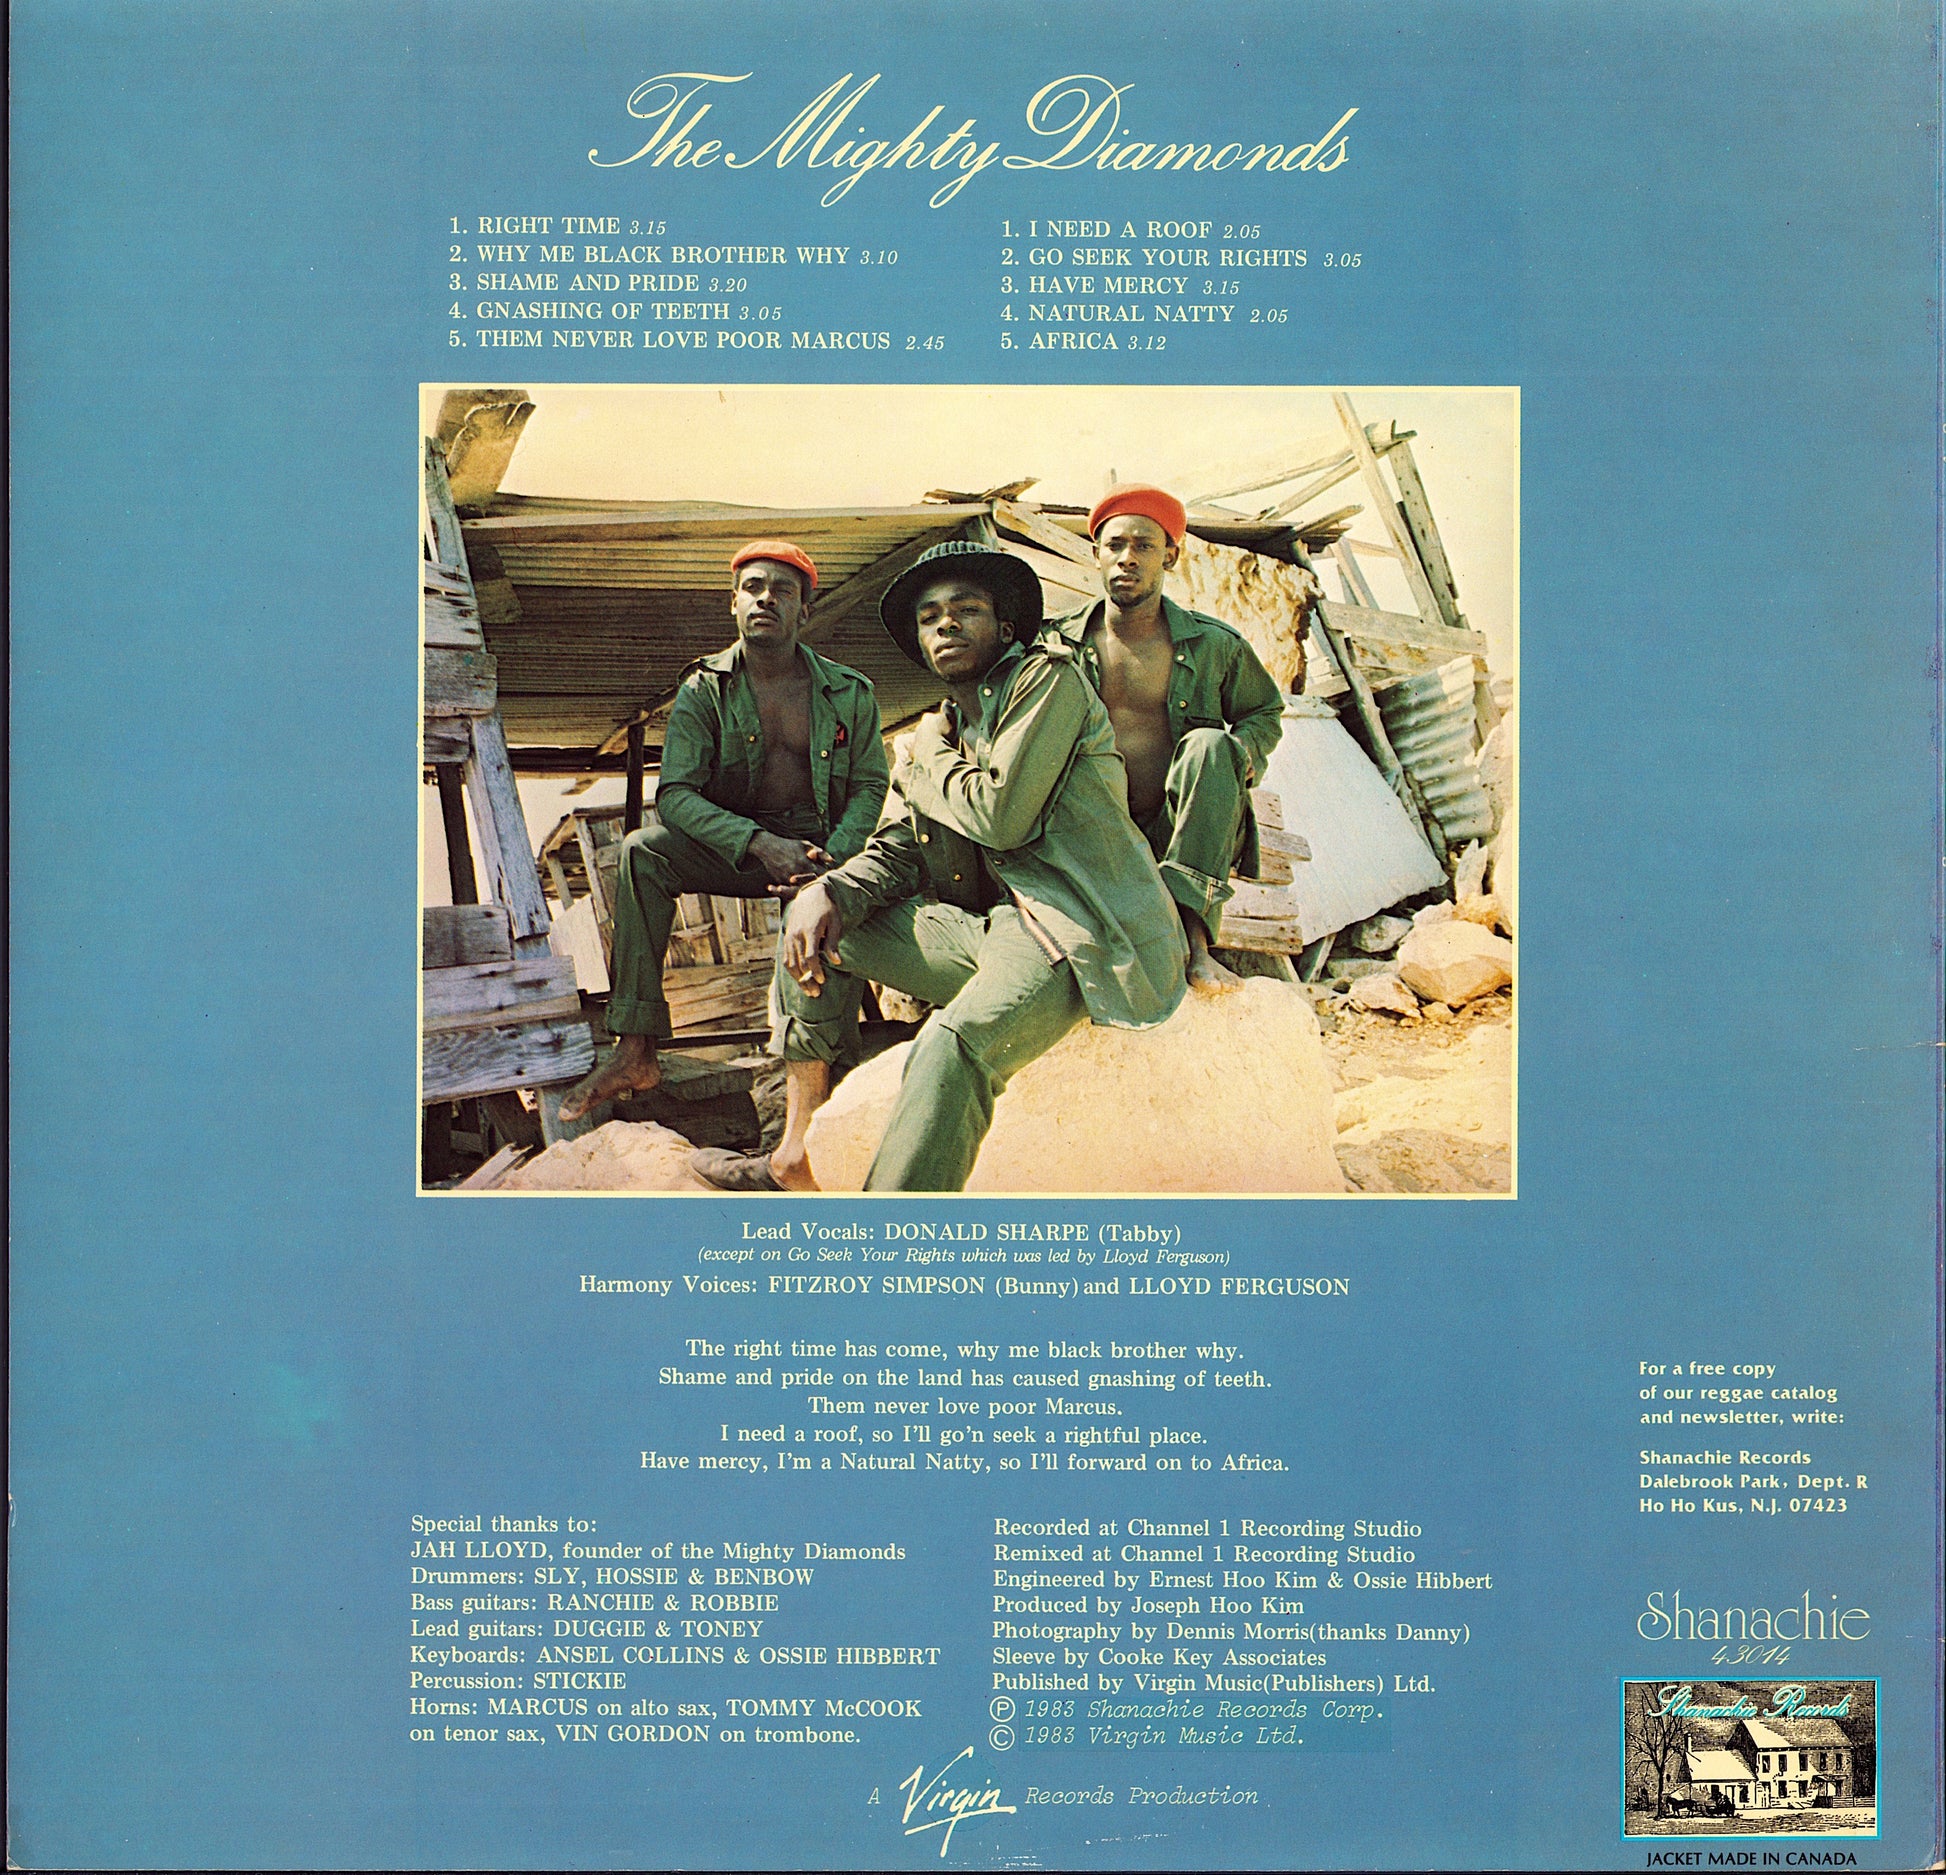 The Mighty Diamonds - Right Time Vinyl LP US